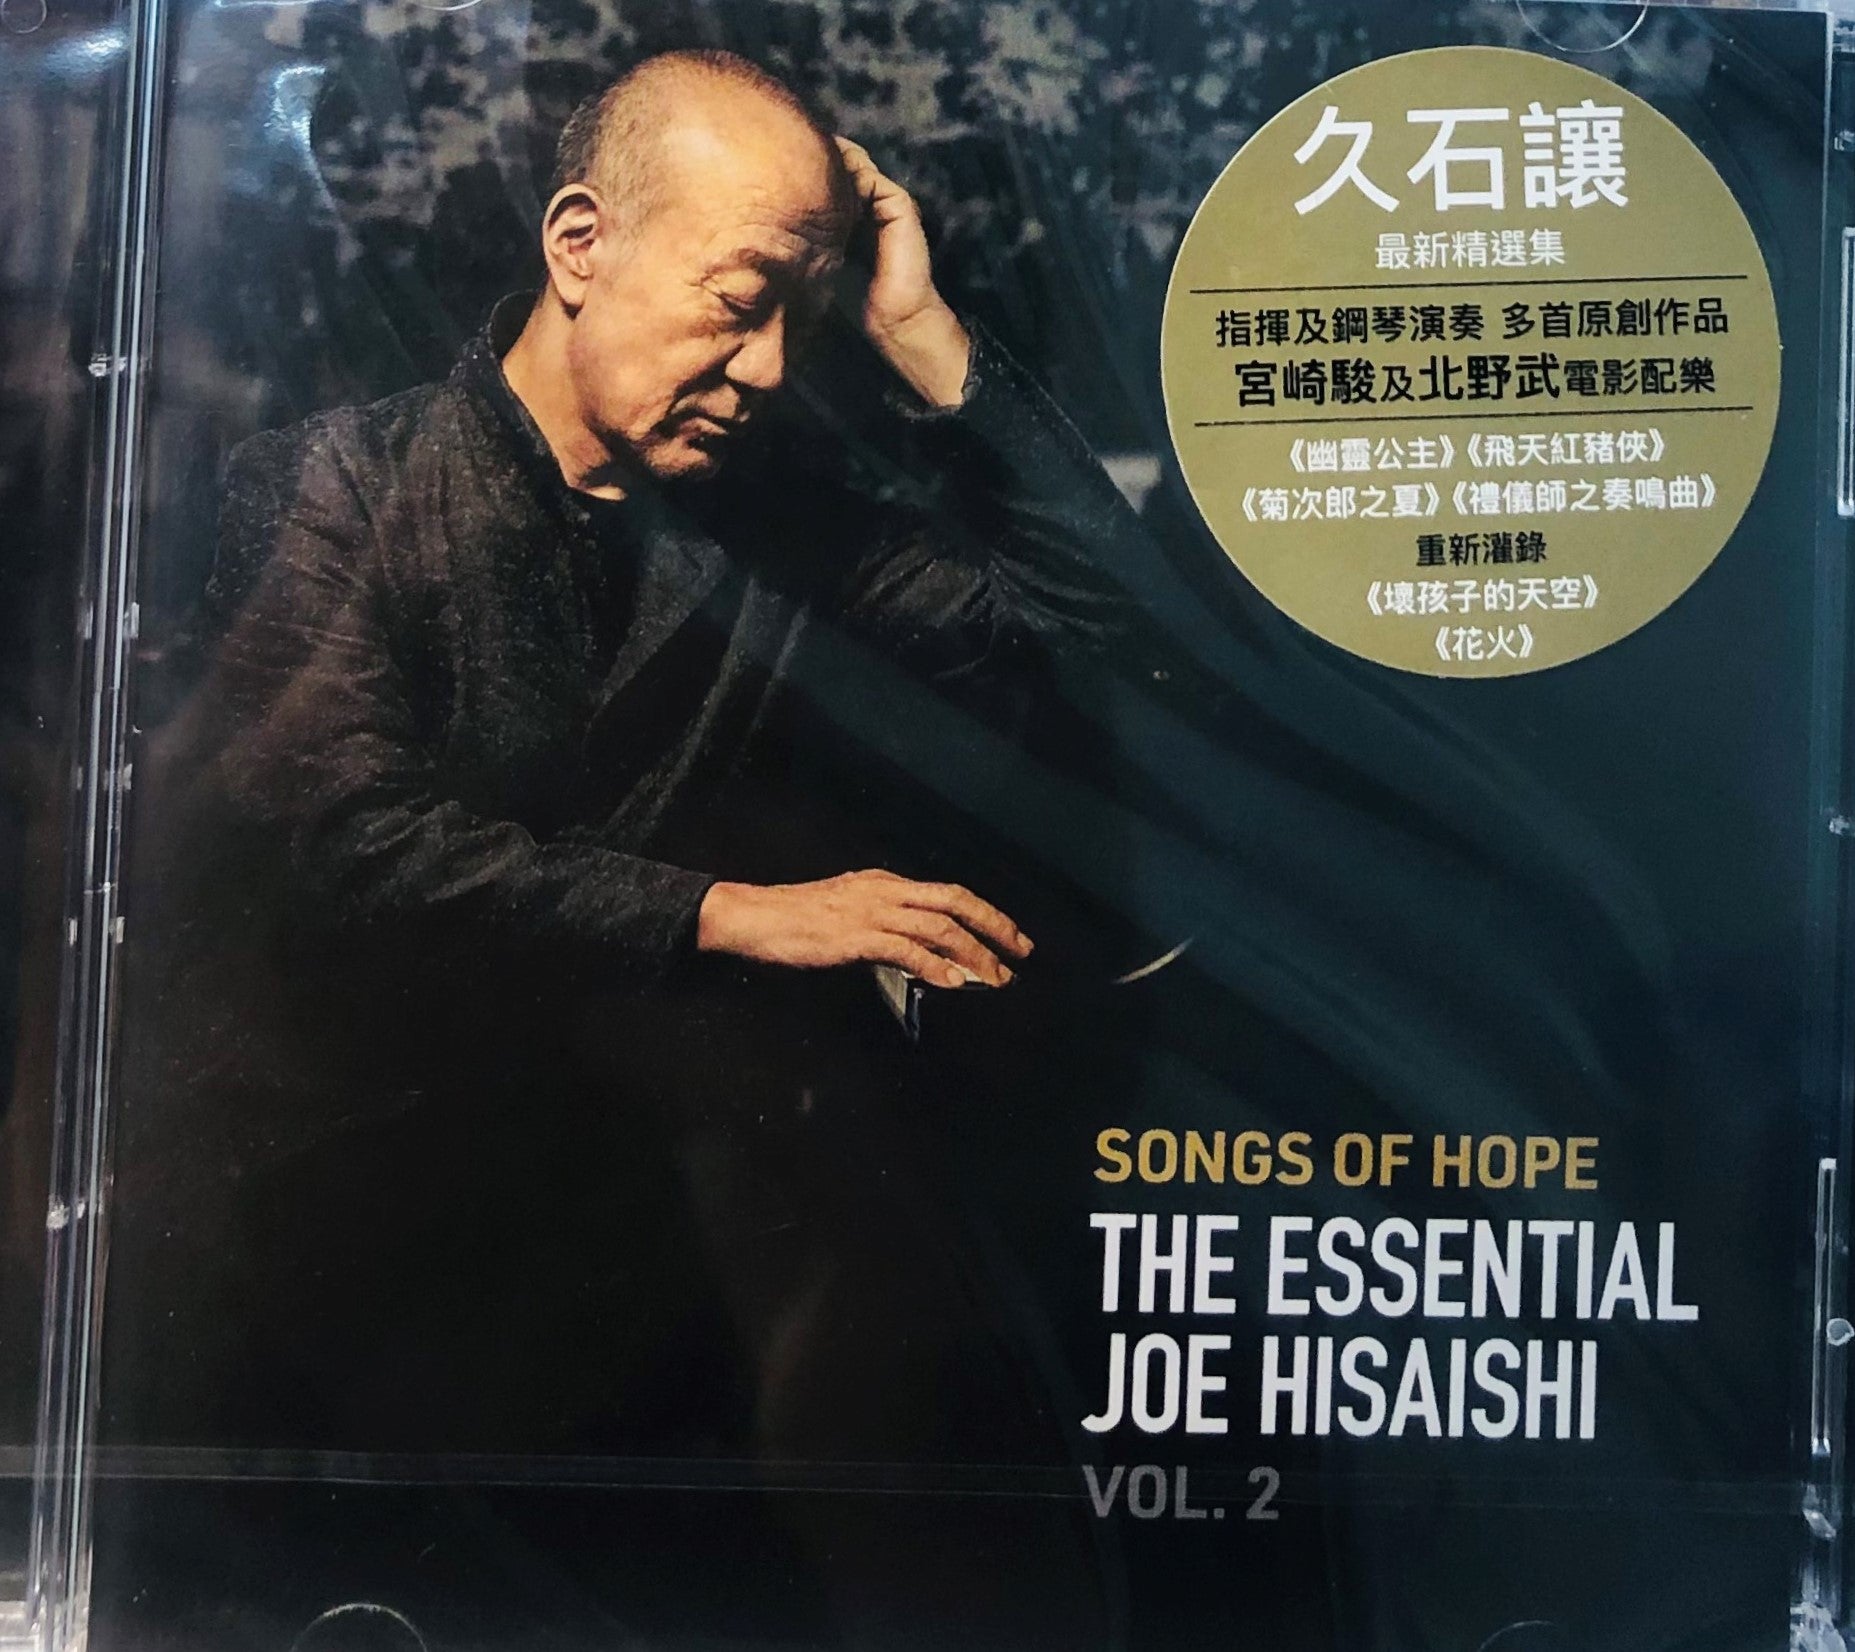 JOE HISAISHI - 久石讓 SONG OF HOPE: THE ESSENTIAL OF JOE HISAISHI VOL 2 (2CD) MADE IN EU